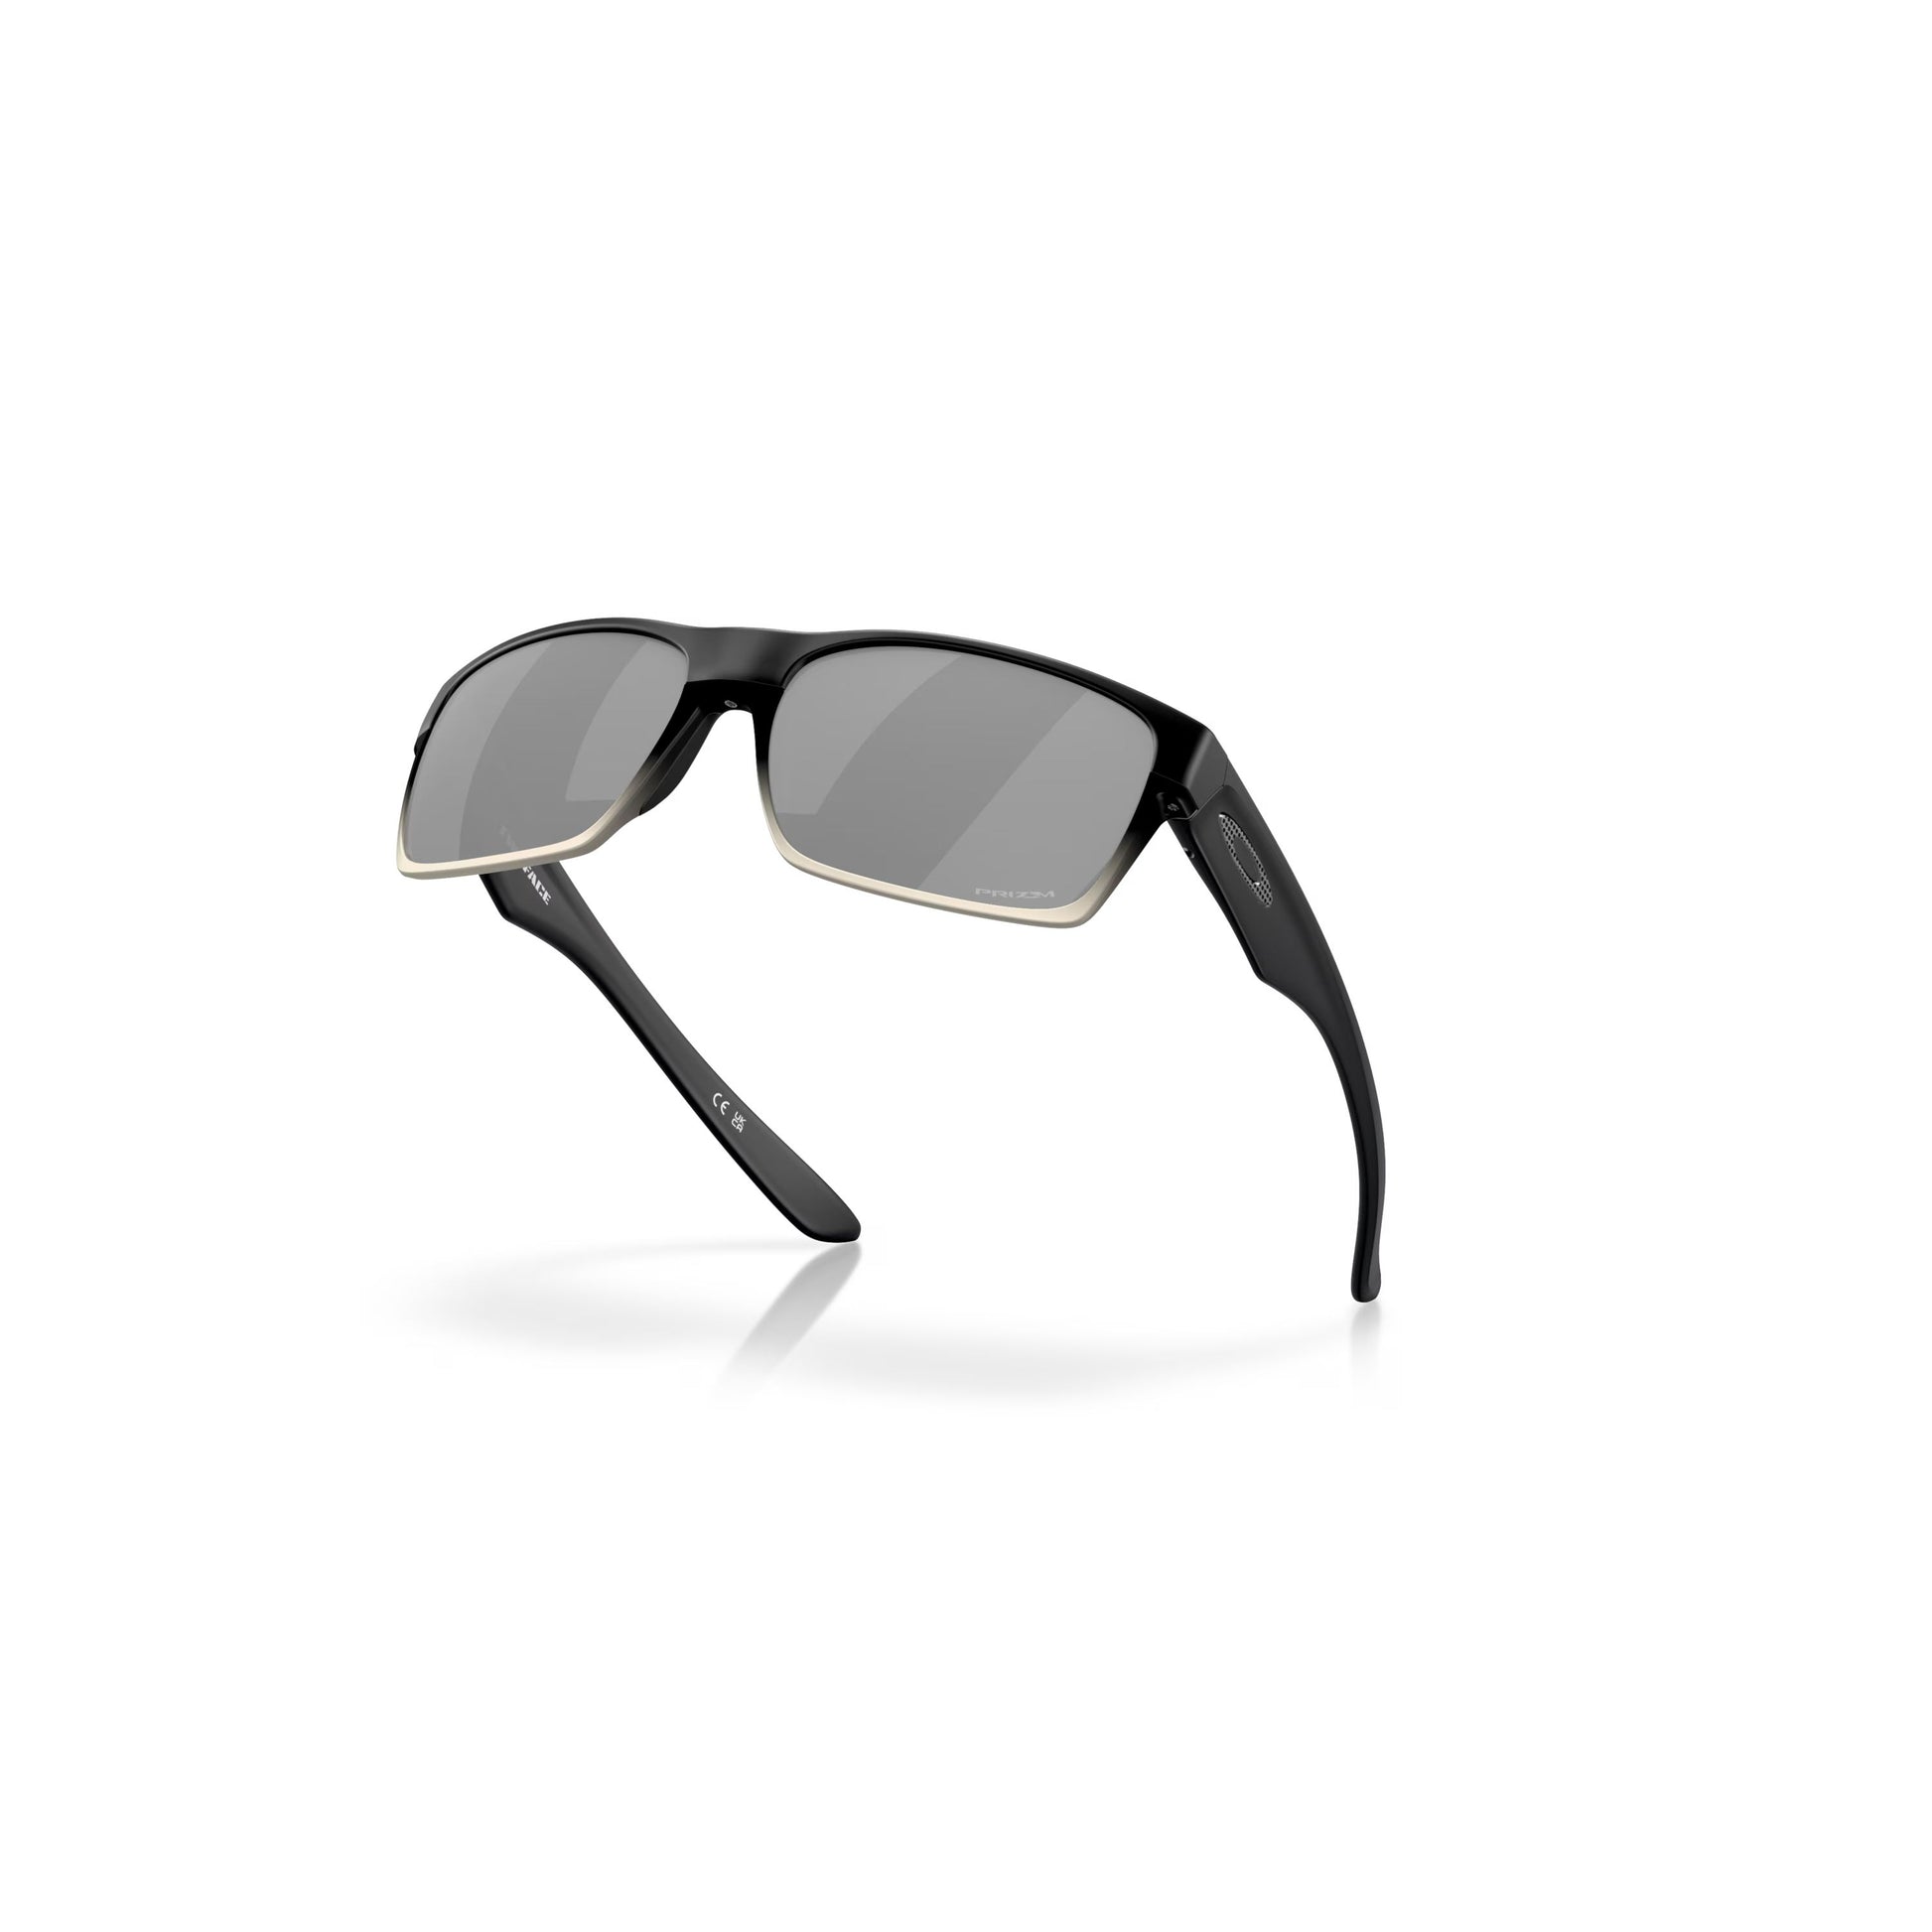 Oakley TwoFace Machinist Sunglasses Matte Black Chrome Iridium - Oakley Sunglasses